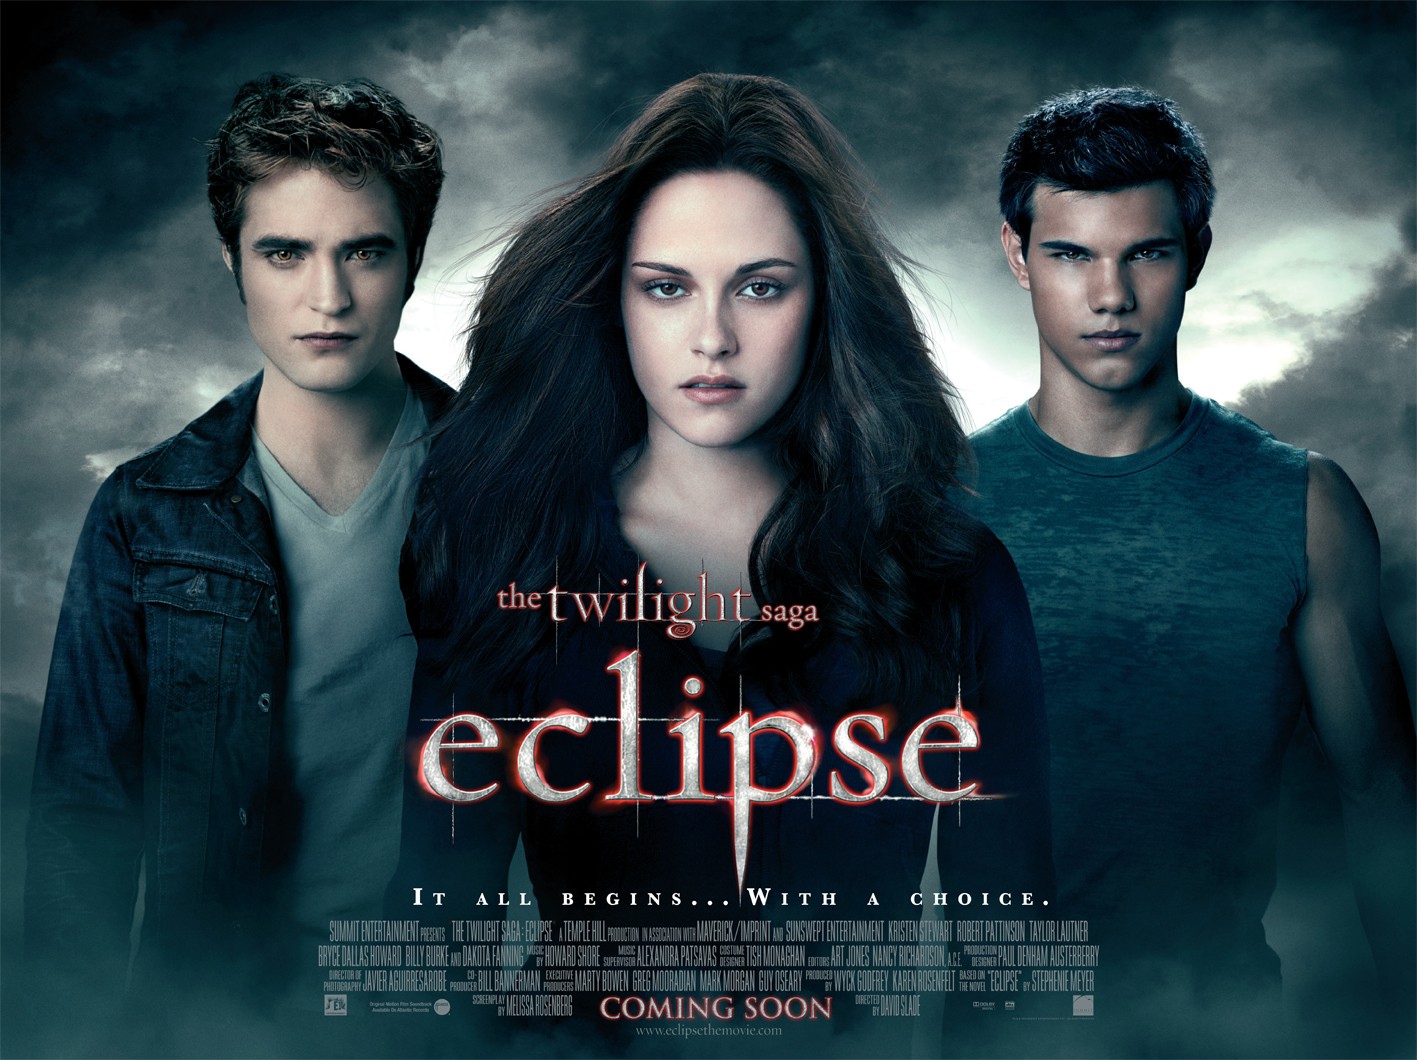 The Twilight Saga: Eclipse #7